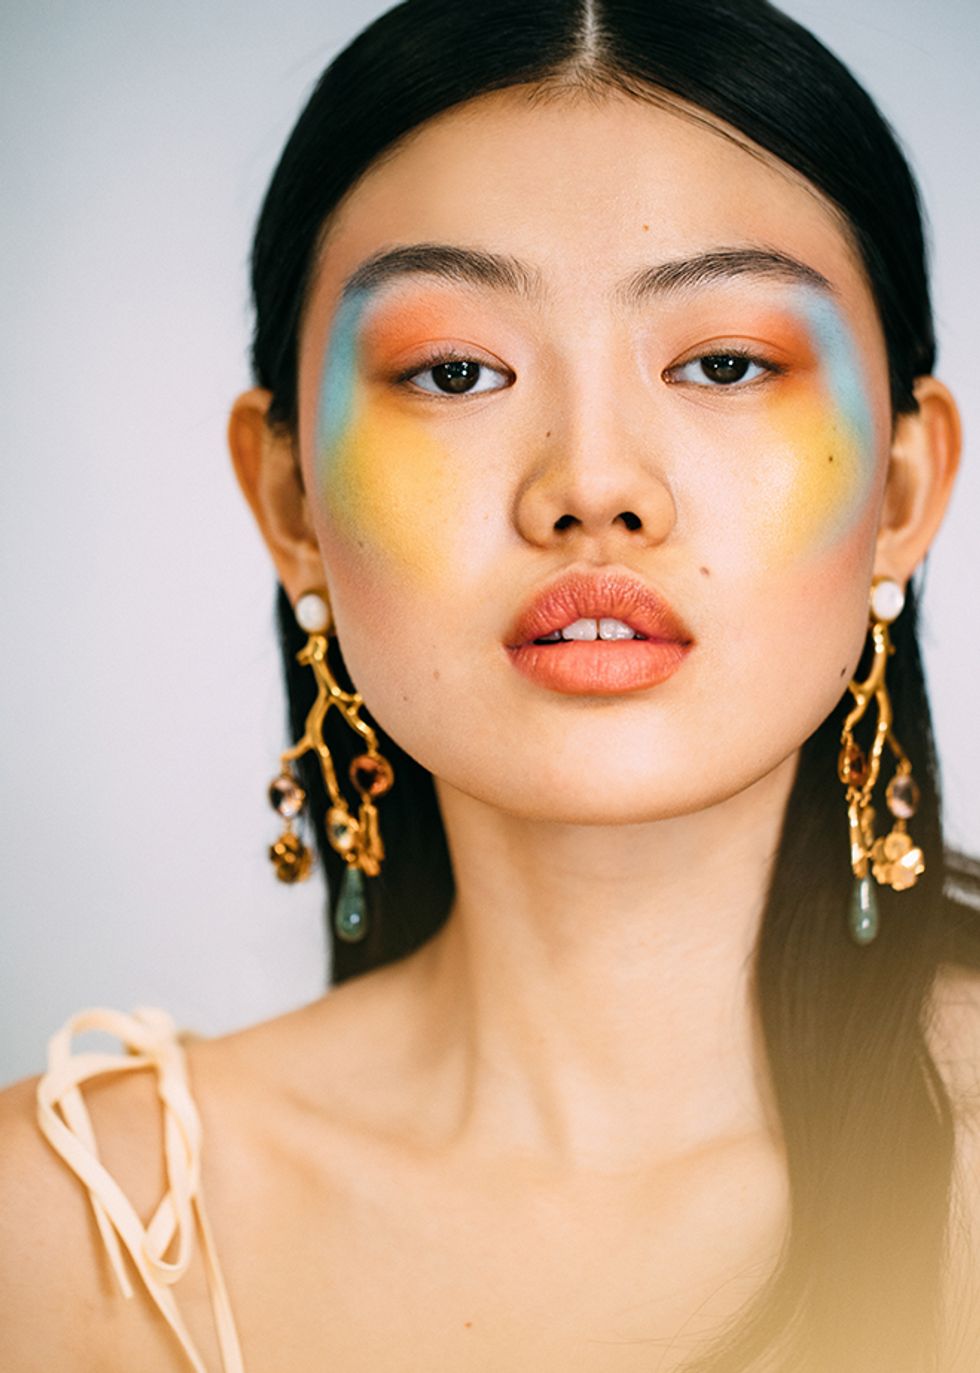 Watercolor Makeup Is Spring 2019’s Biggest Makeup Trend - Coveteur ...